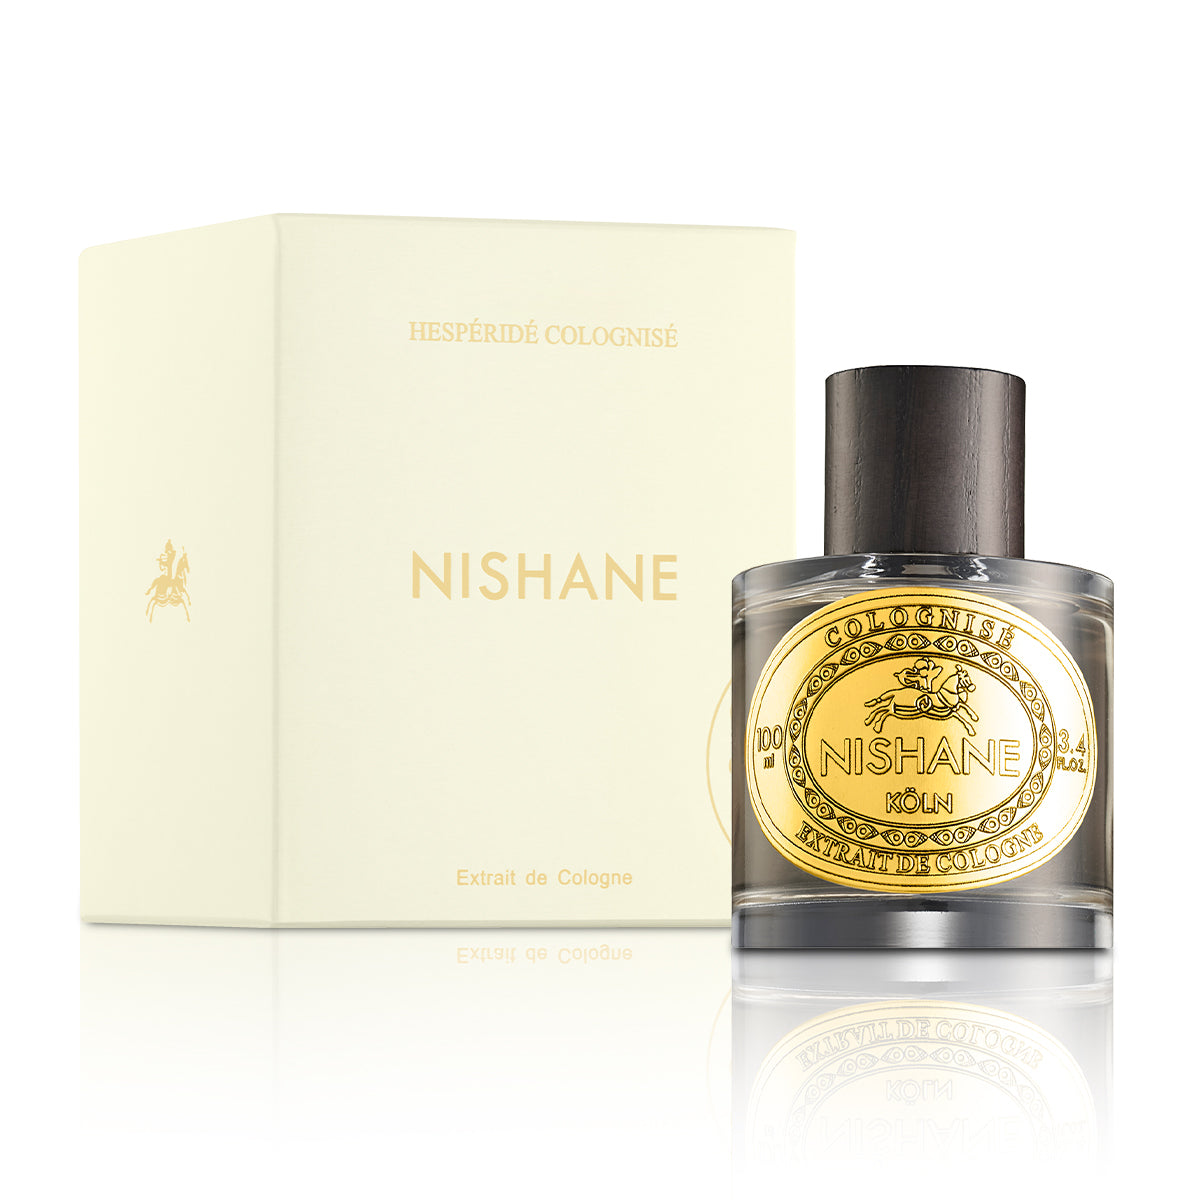 Hesperide Colognise - Nishane - EP 100 ml